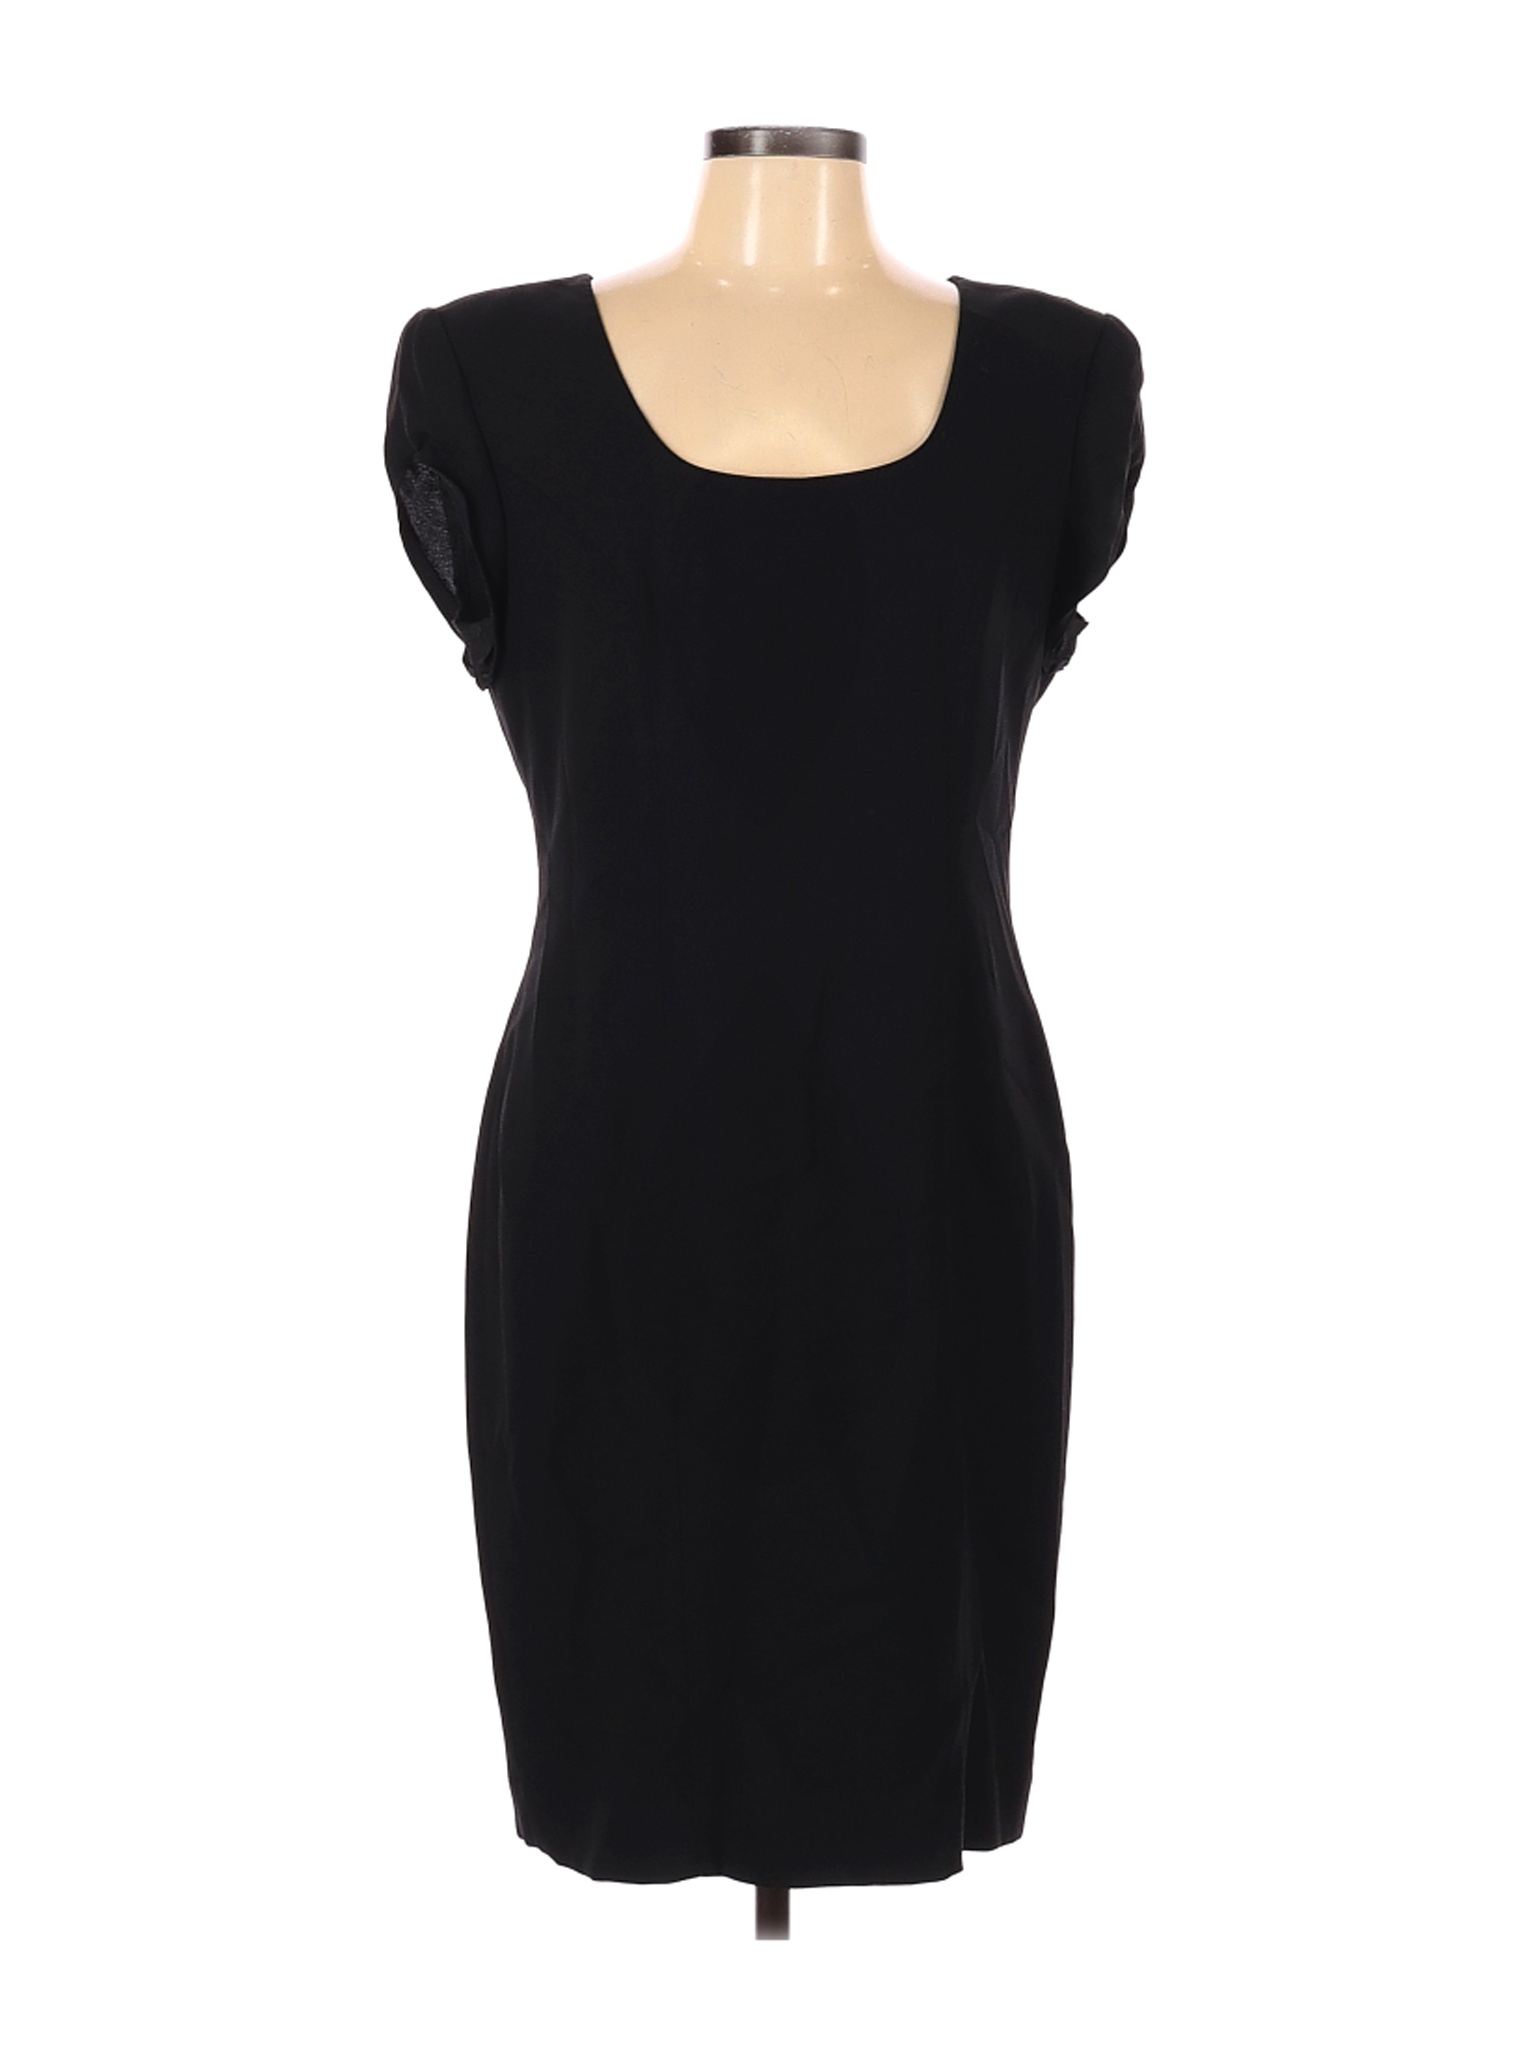 Liz Claiborne Women Black Cocktail Dress 12 | eBay